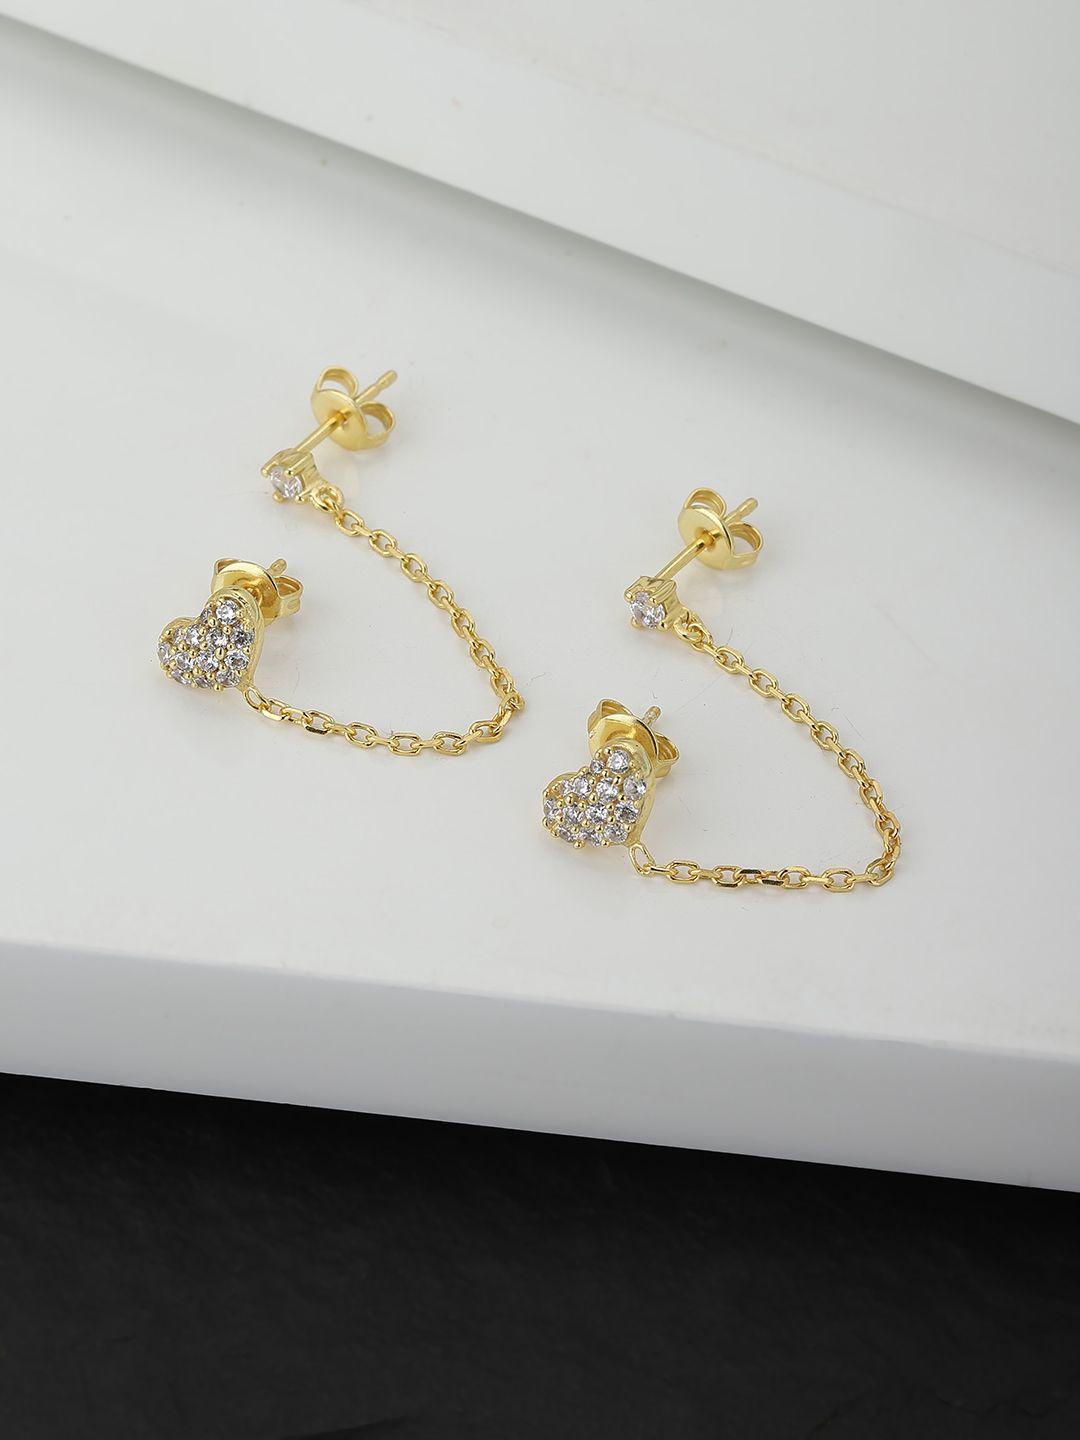 carlton london gold-plated heart shaped studs earrings